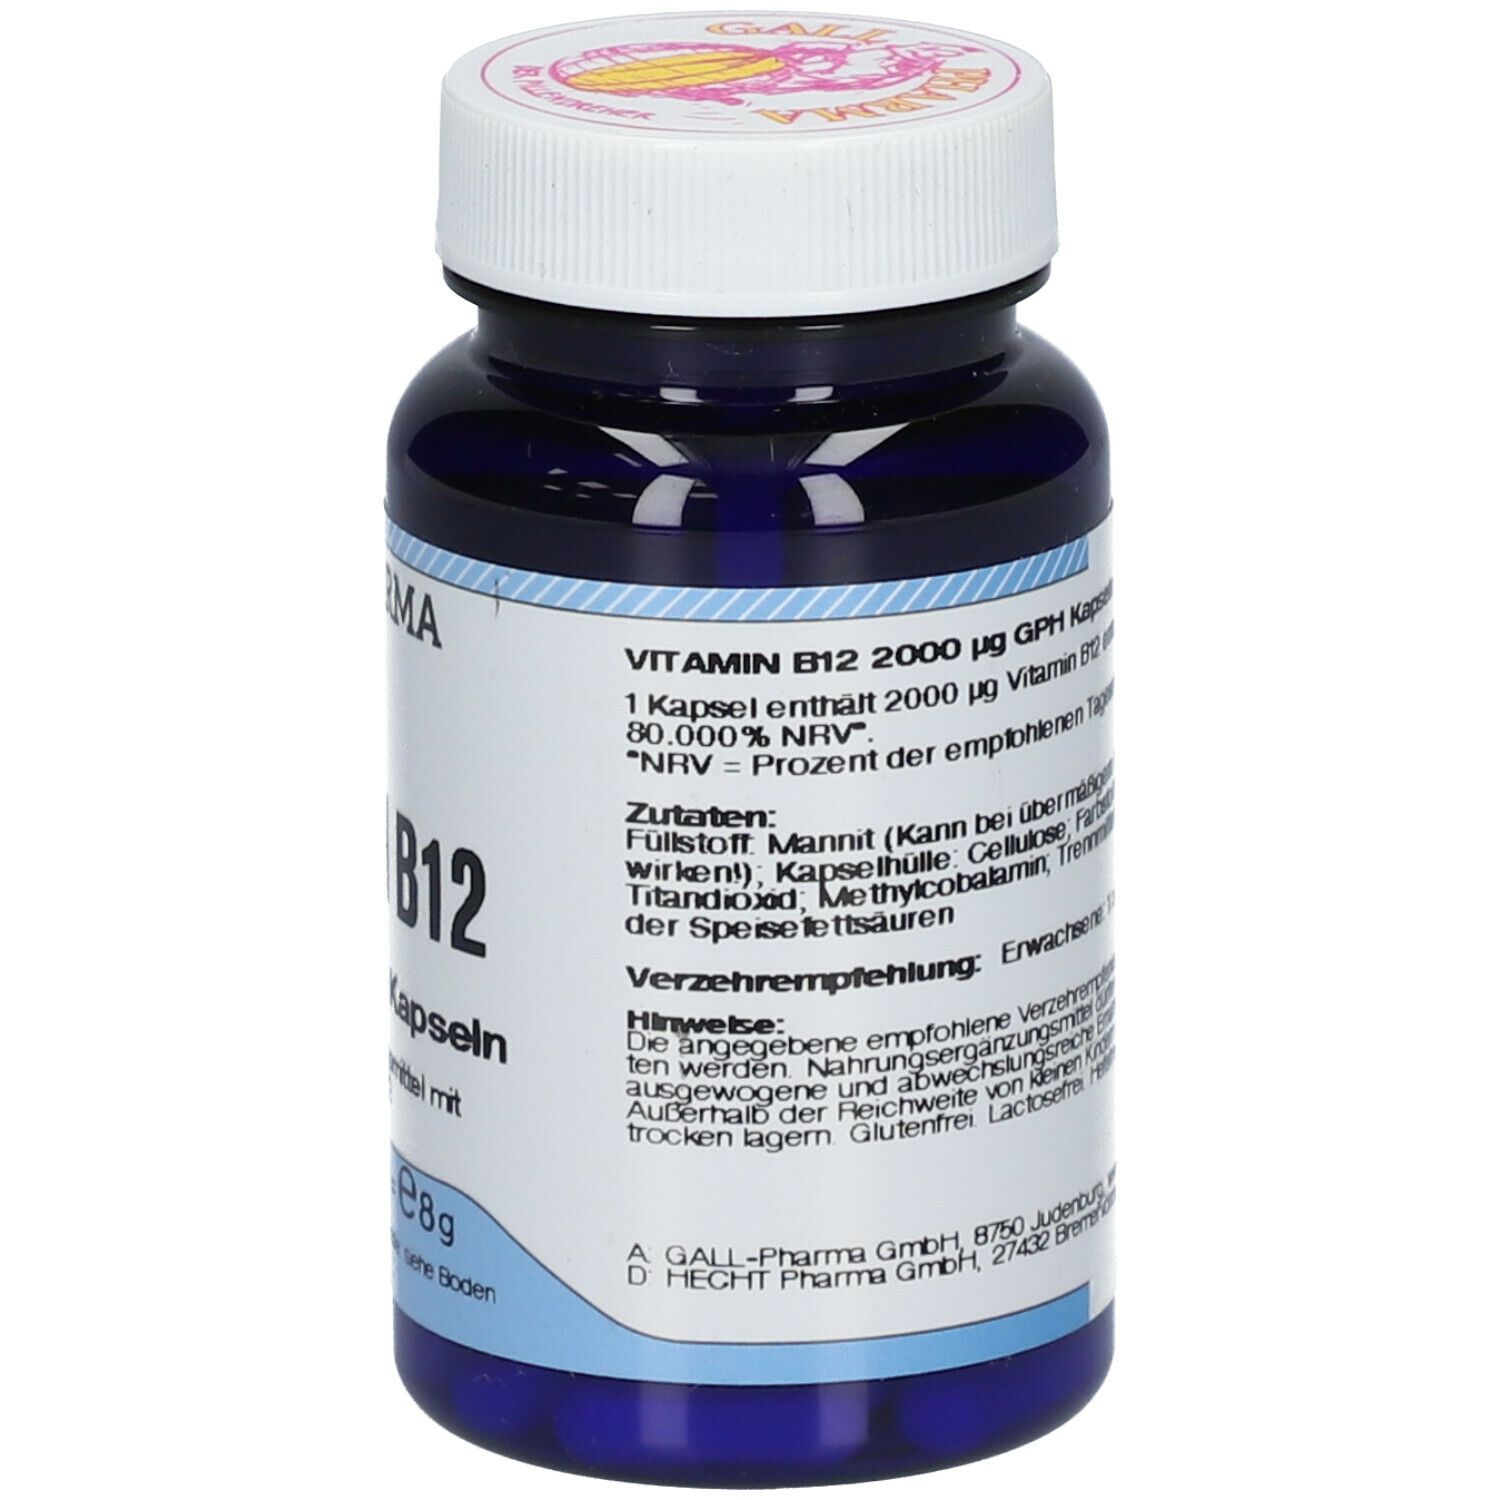 GALL PHARMA Vitamin B12